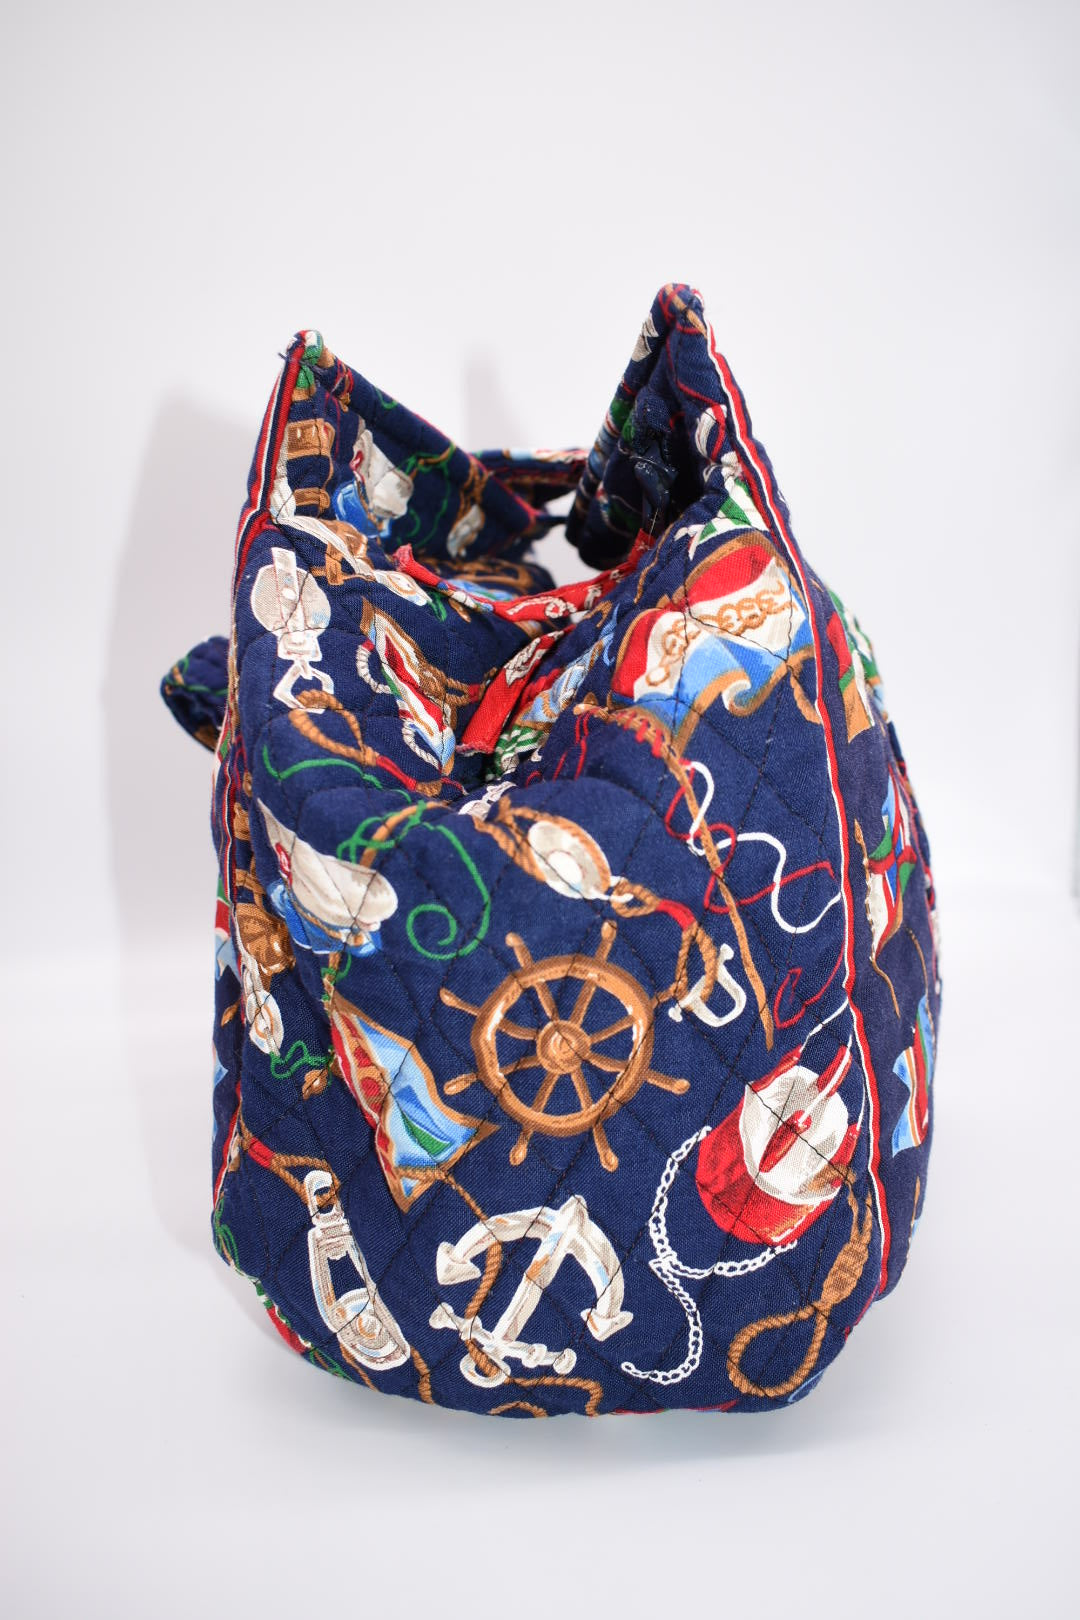 Vintage Vera Bradley Hoosier Shoulder Bag in "Regatta- 1994" Pattern